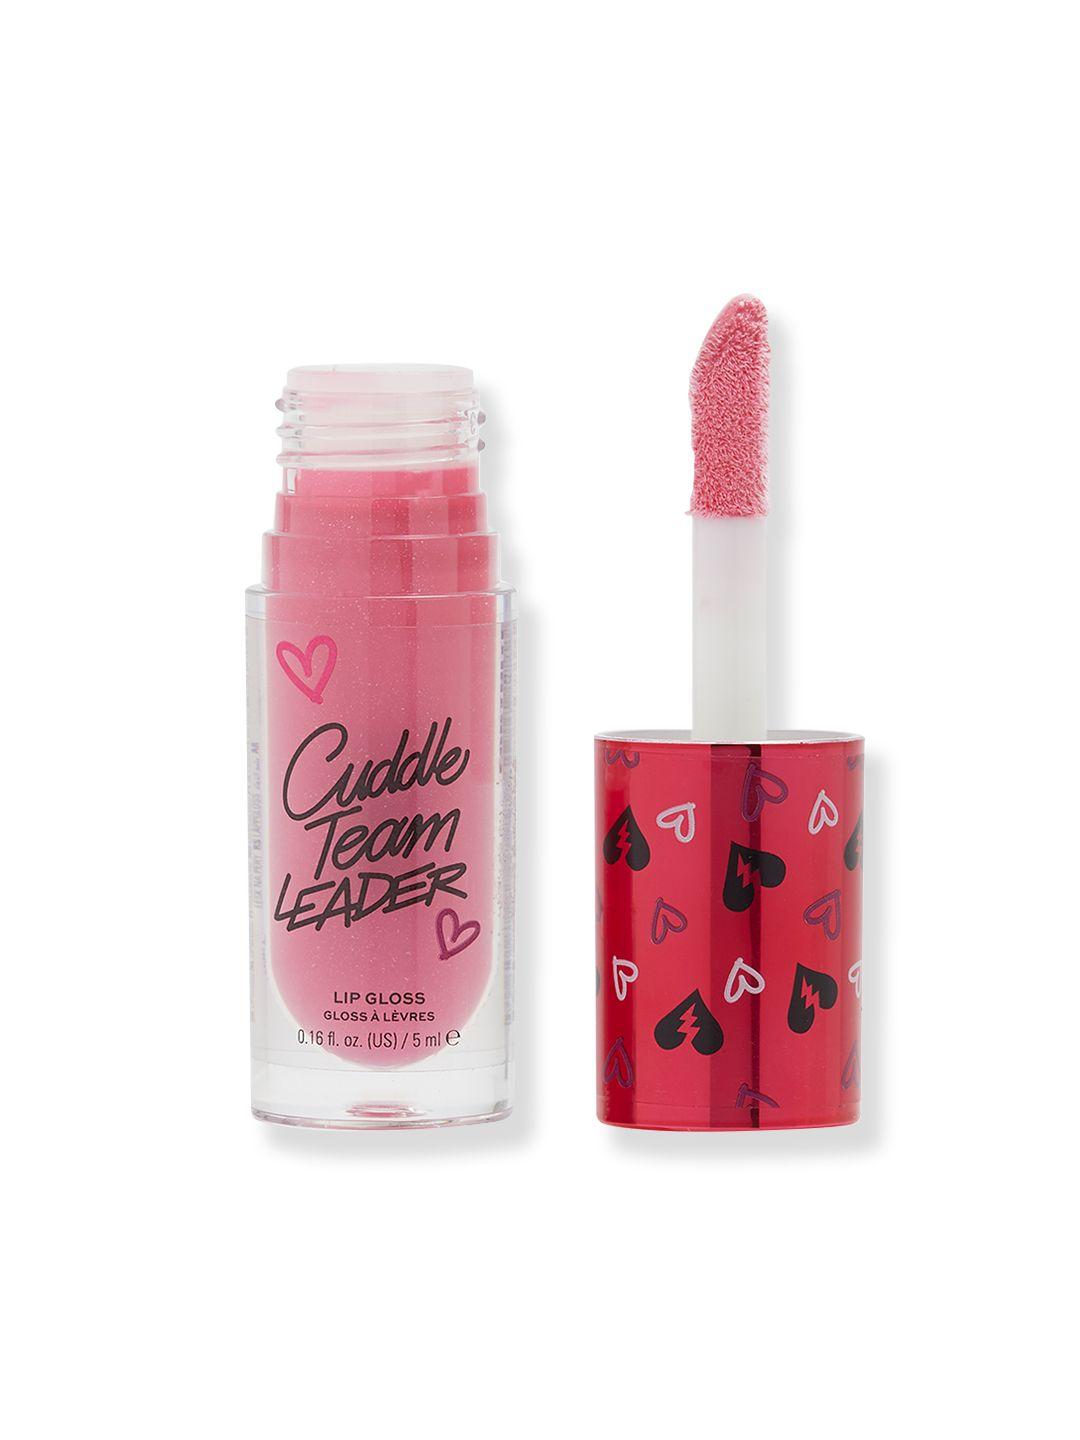 makeup revolution london x fortnite cuddle team leader pink shimmer lip gloss - 5ml